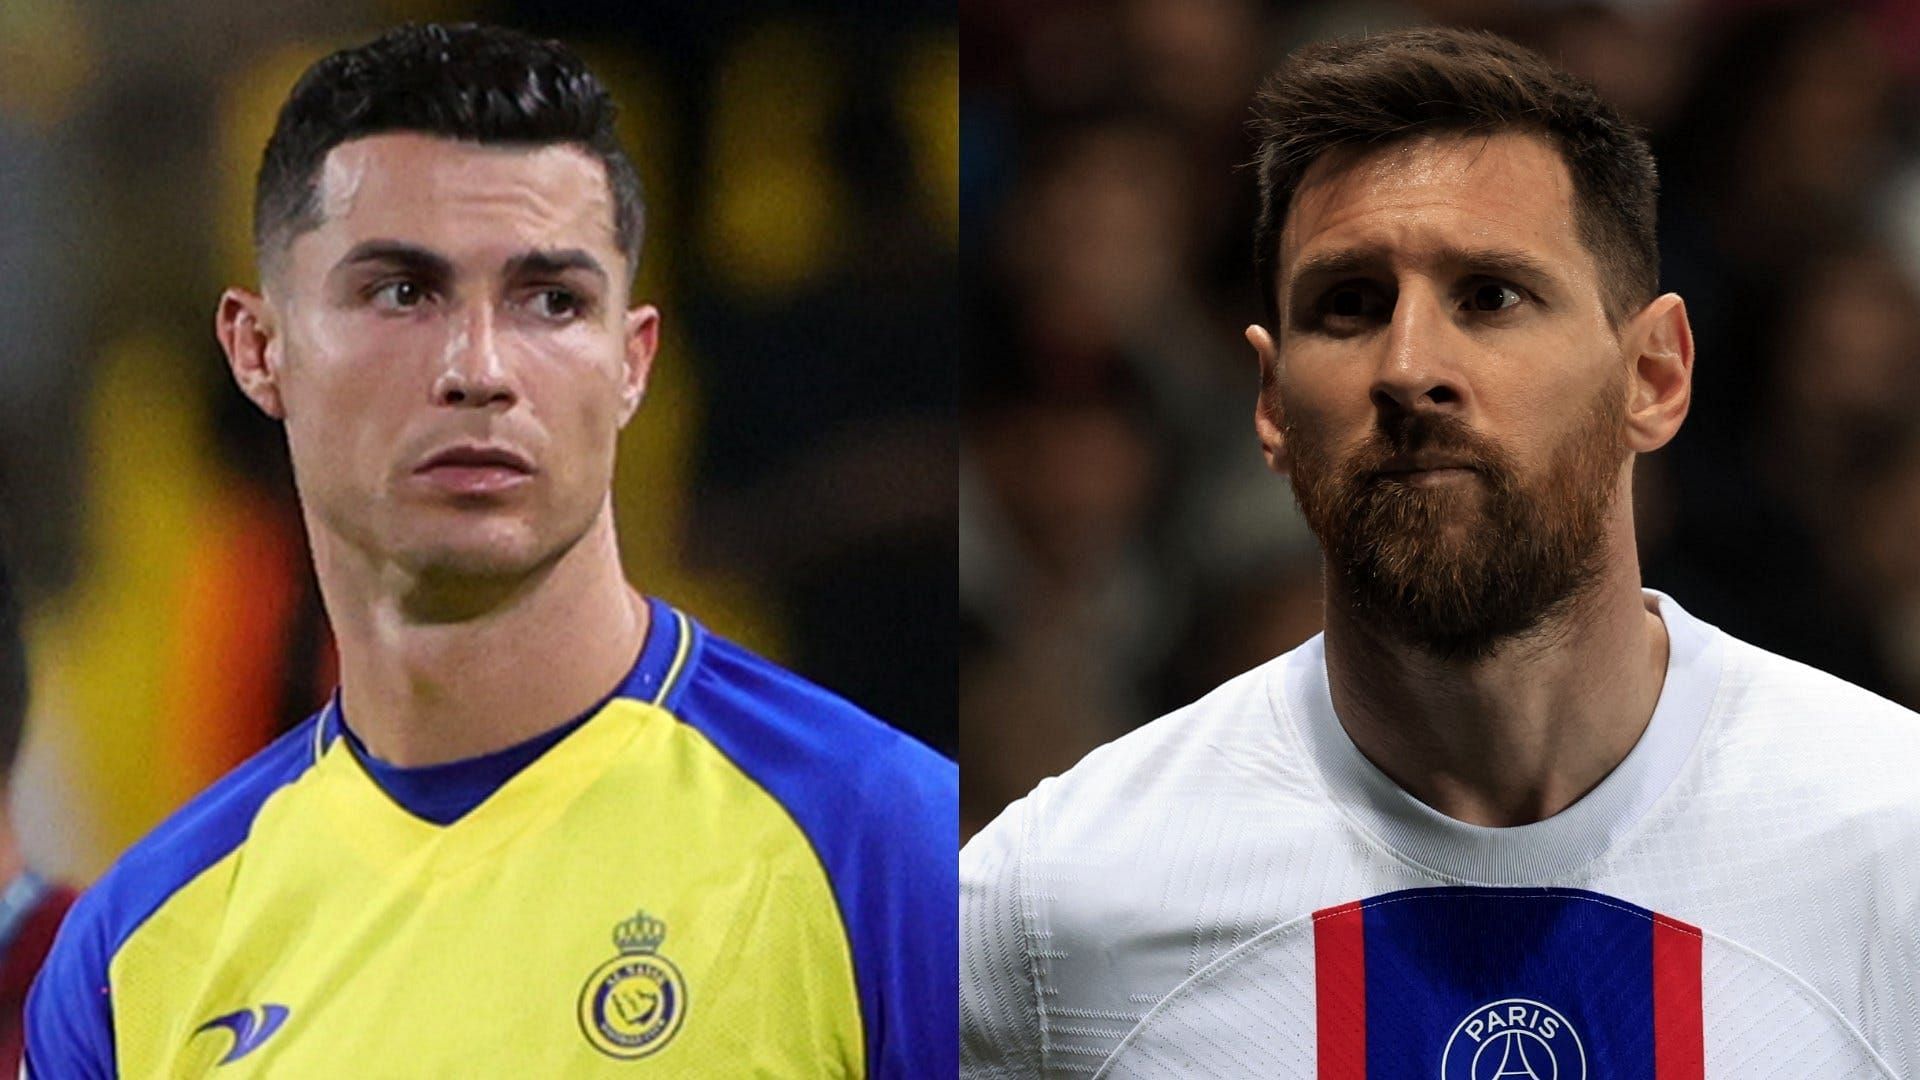 Who has scored more goals Messi or Ronaldo?